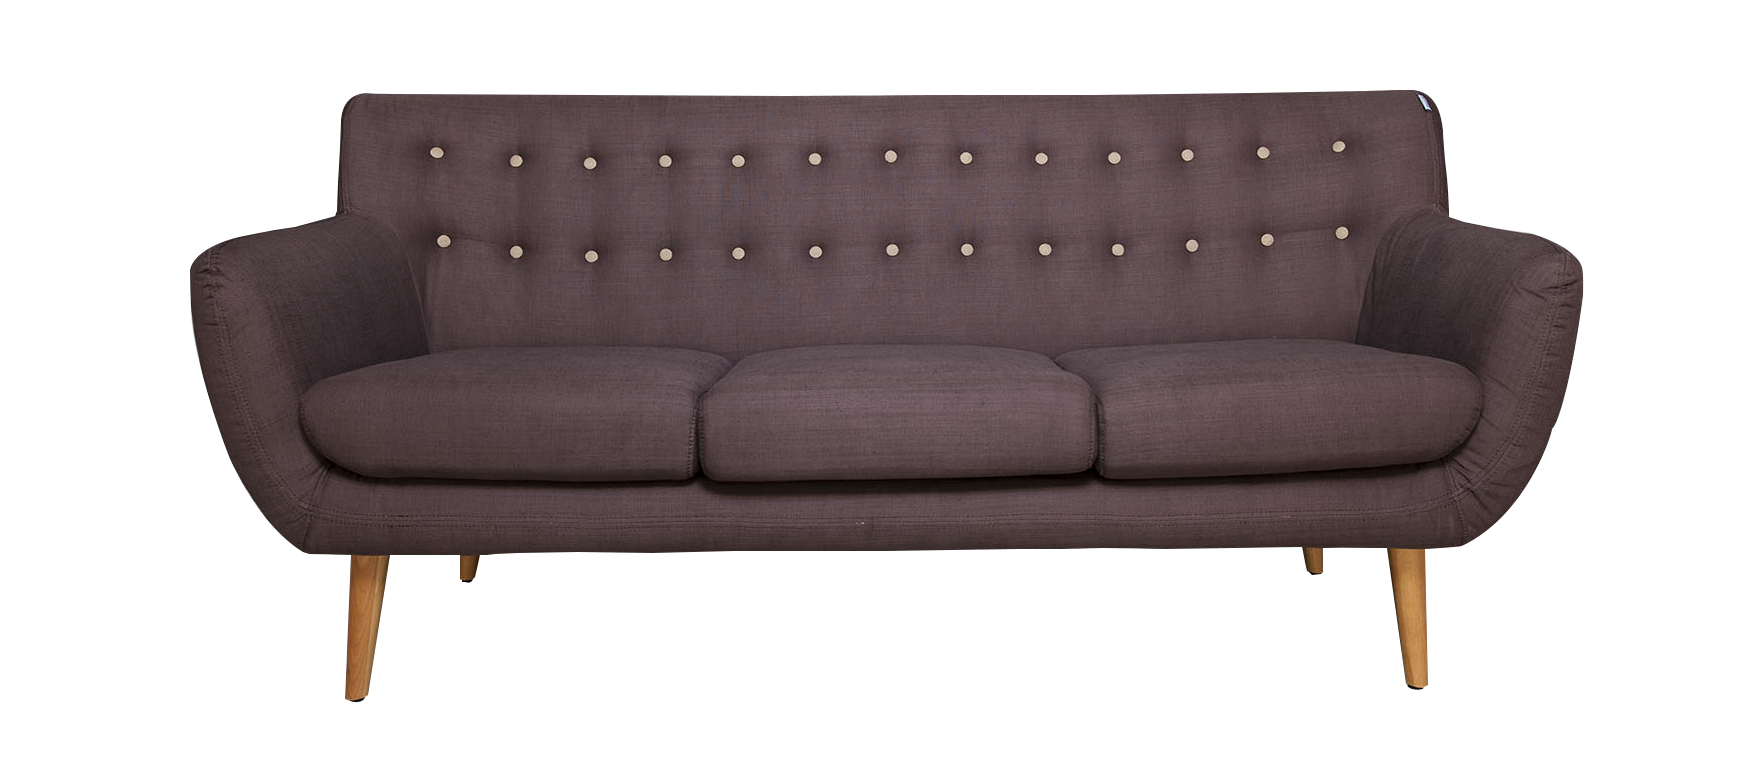 Purple Sofa PNG HD Image